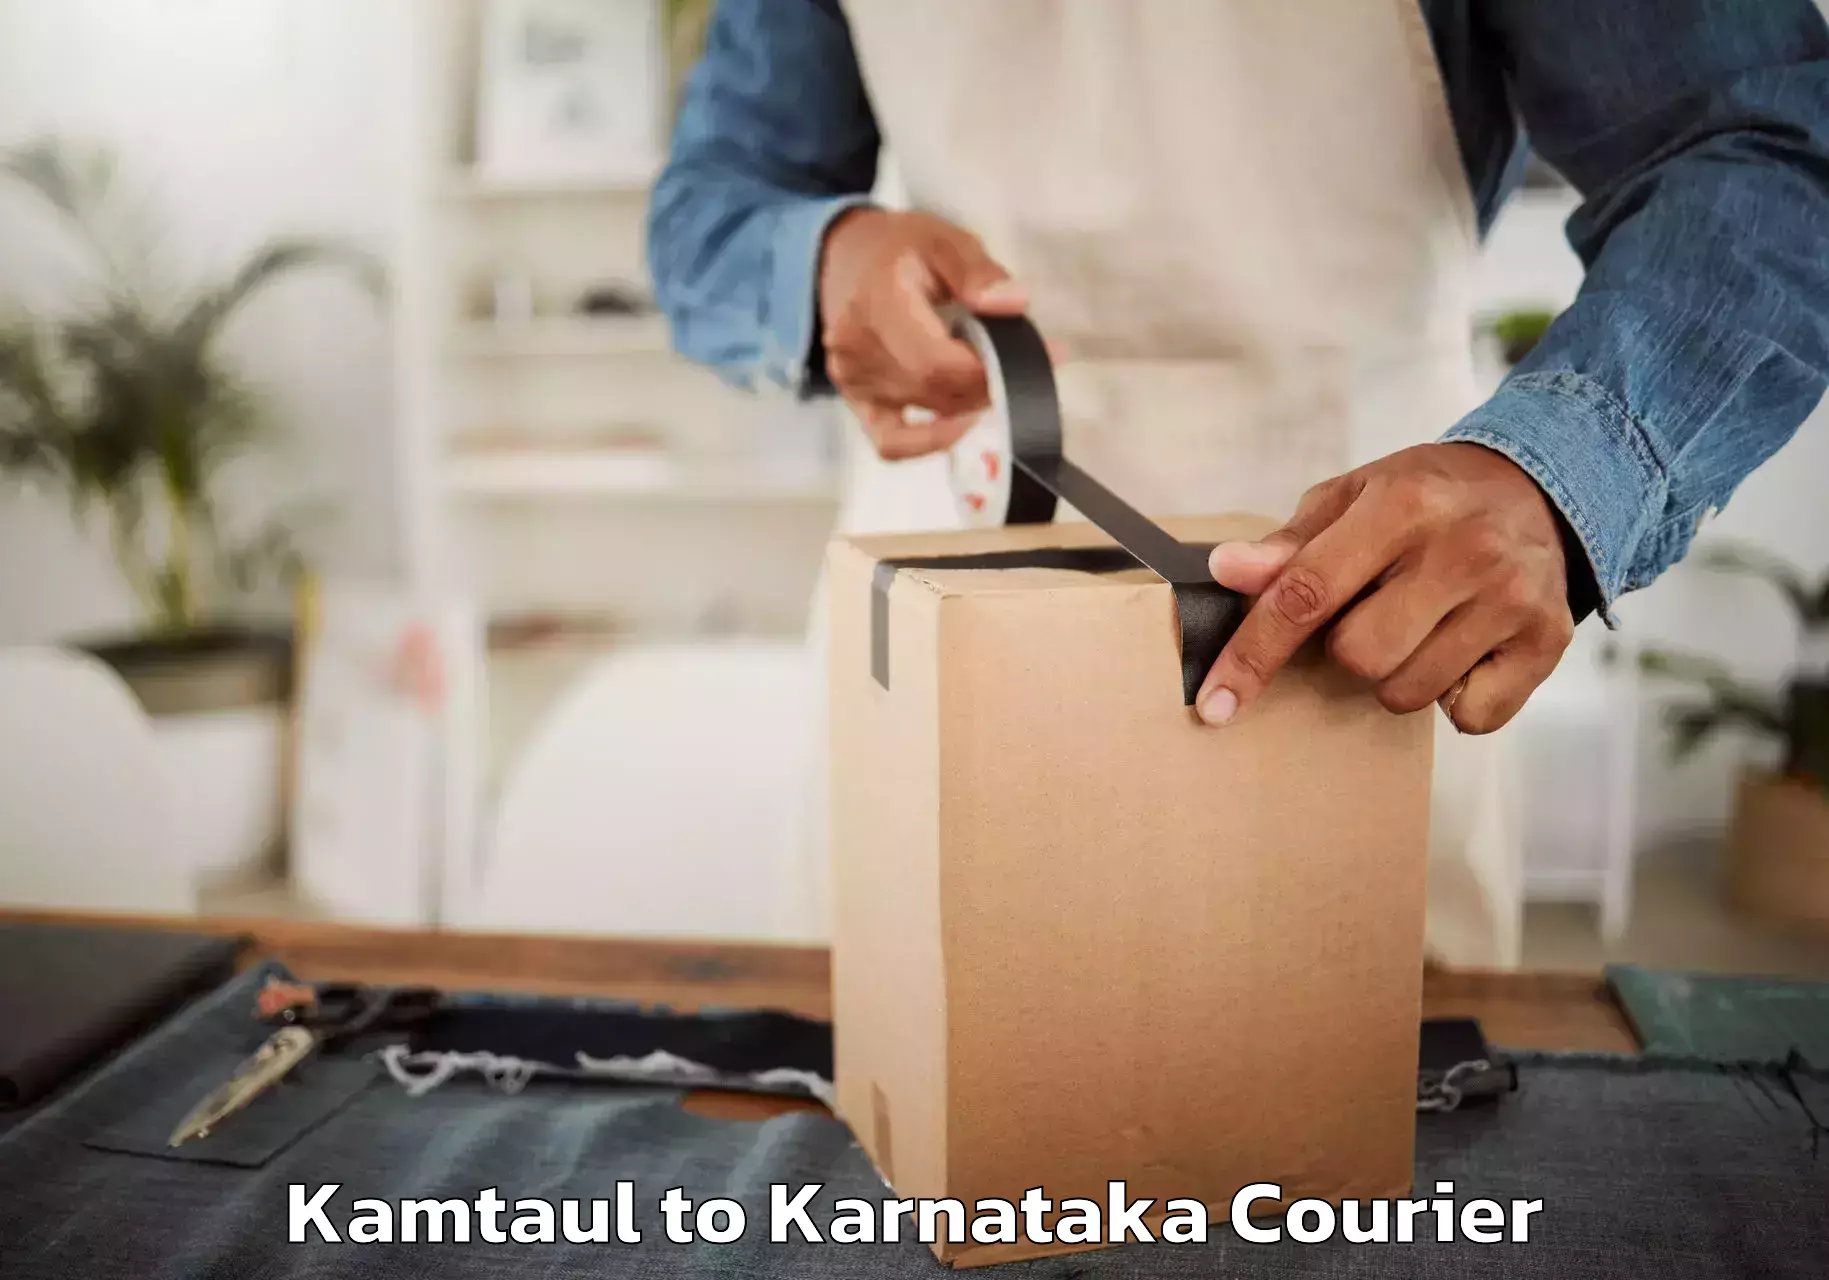 Furniture moving specialists Kamtaul to Karnataka